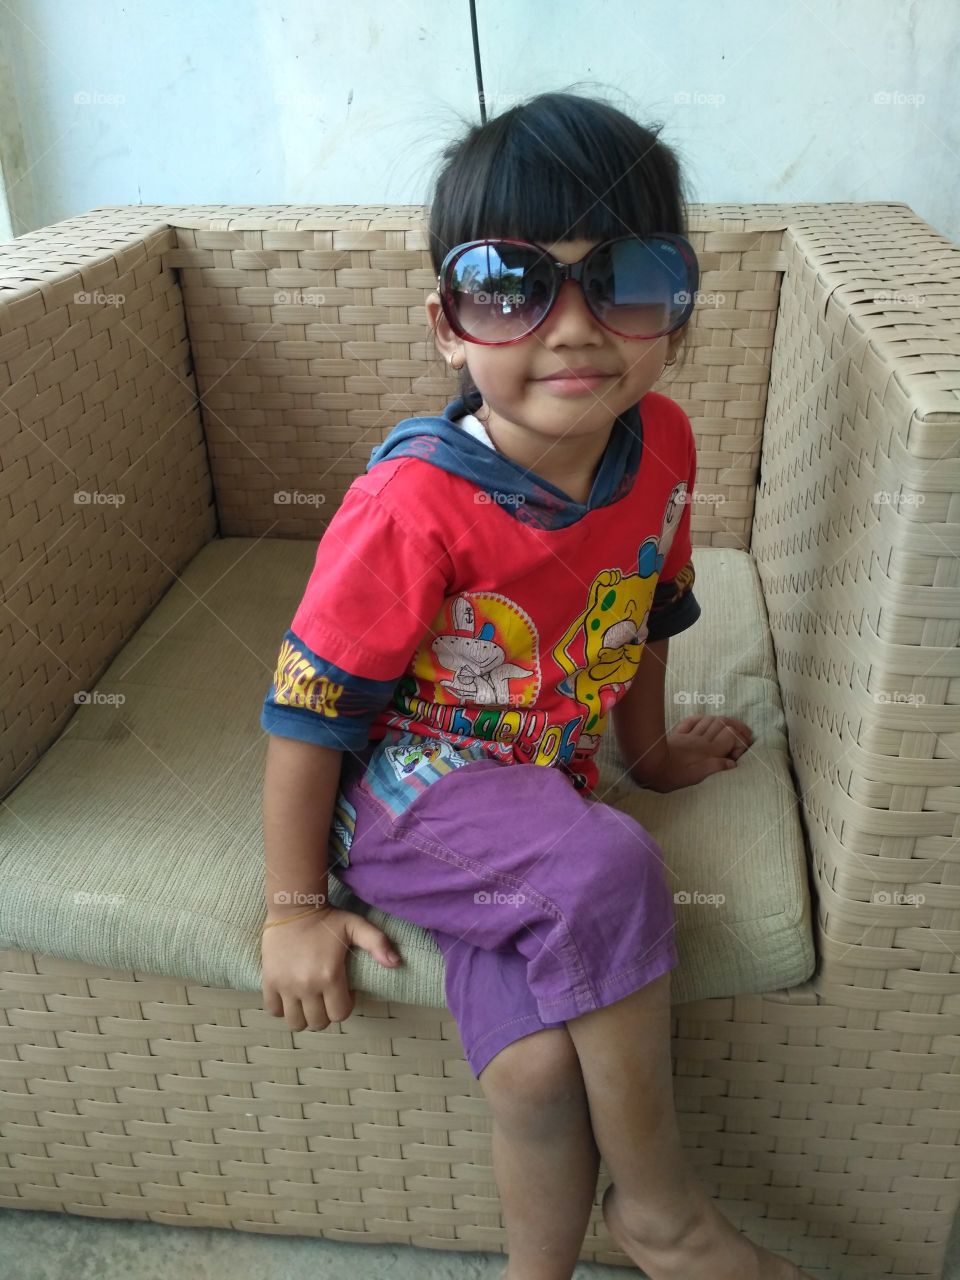 sahira asking me to take photo while  wearing my sun glasses....a big sun 👓